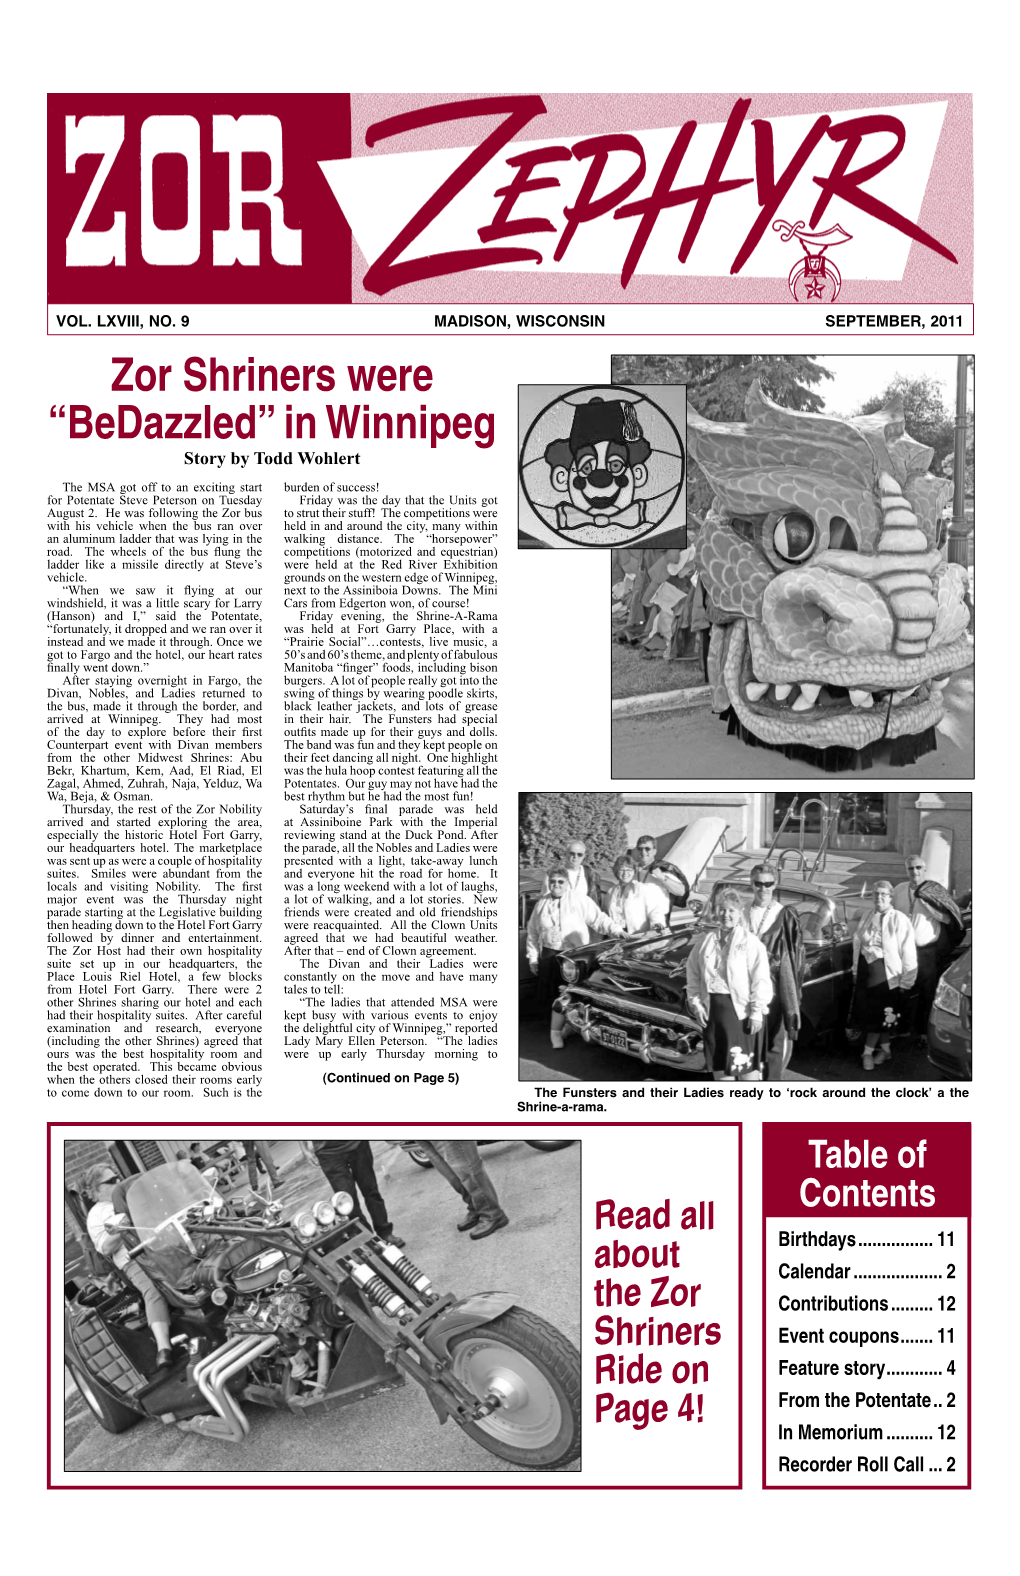 Zor Shriners Were “Bedazzled” in Winnipeg